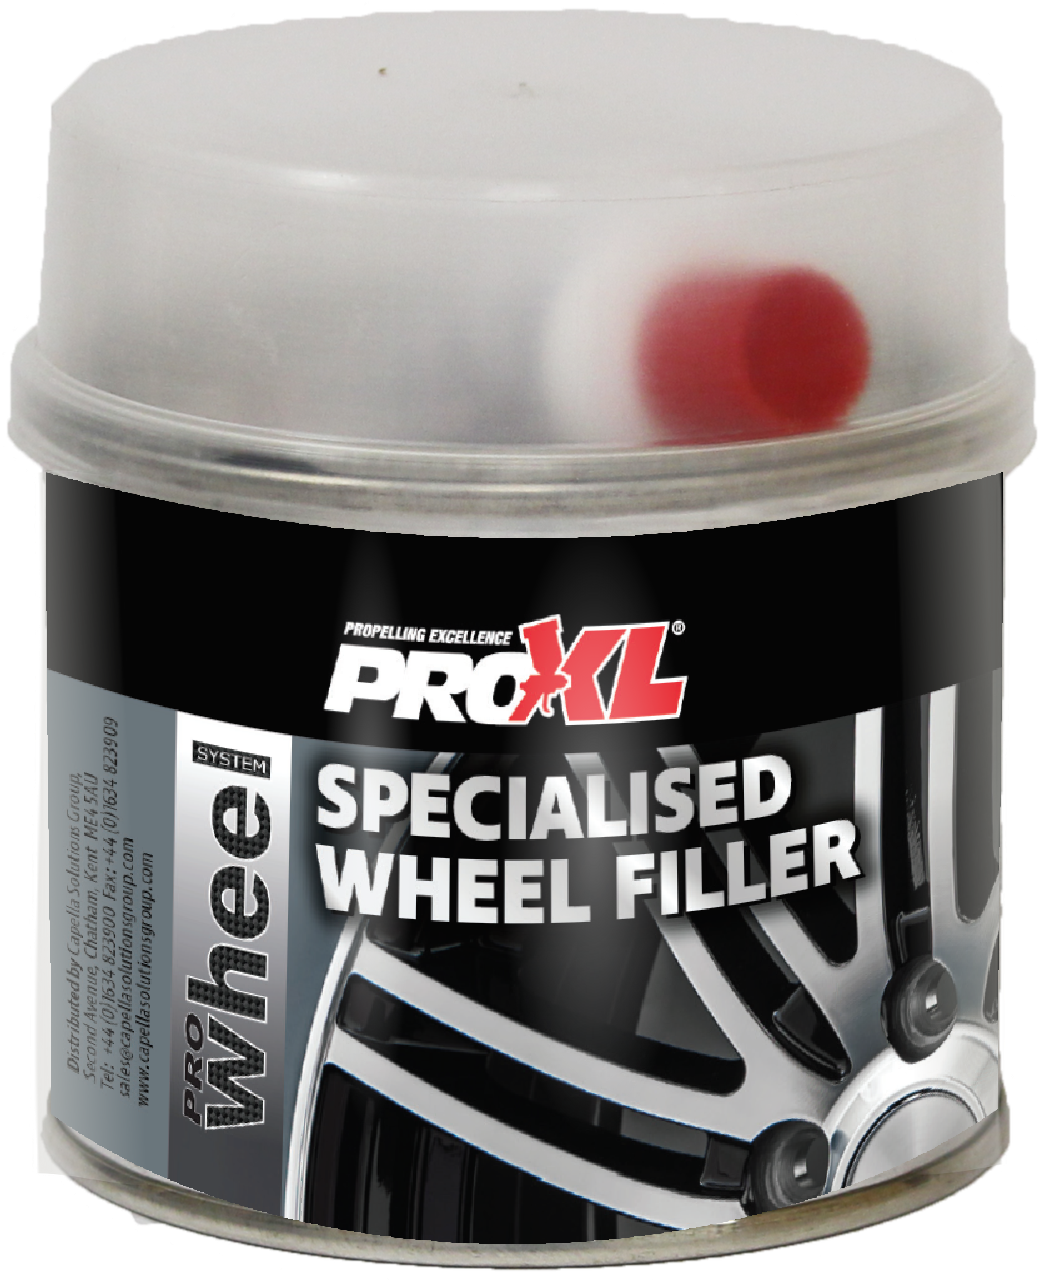 ProWheel Specialised Wheel Filler (250ml) Product Image